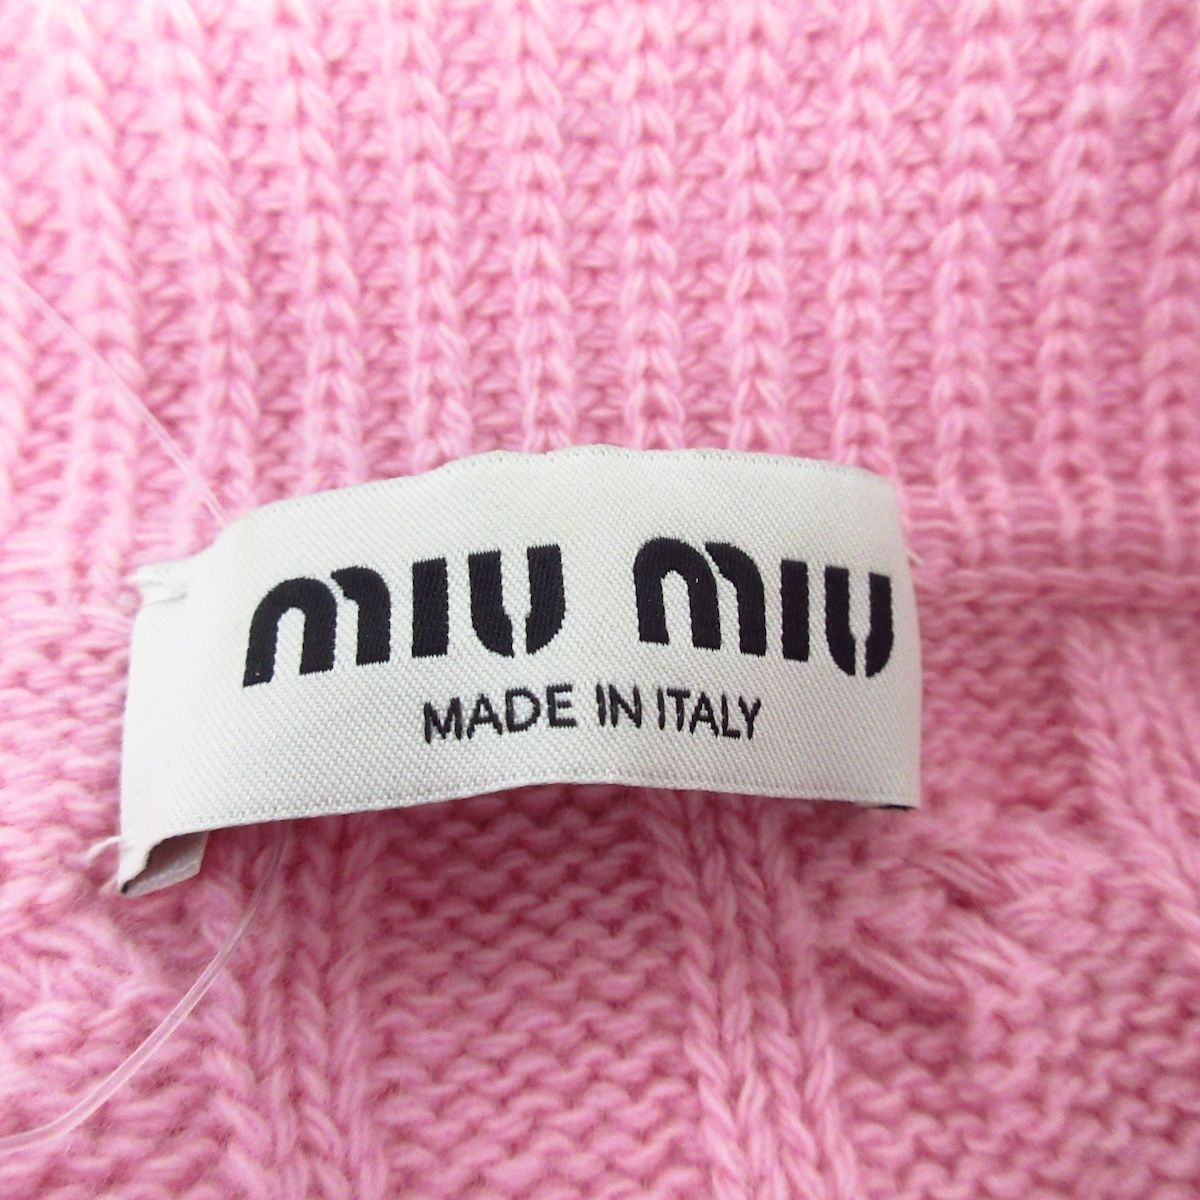 miumiu(ミュウミュウ) カーディガン サイズ36美品 ピンク×白 長袖